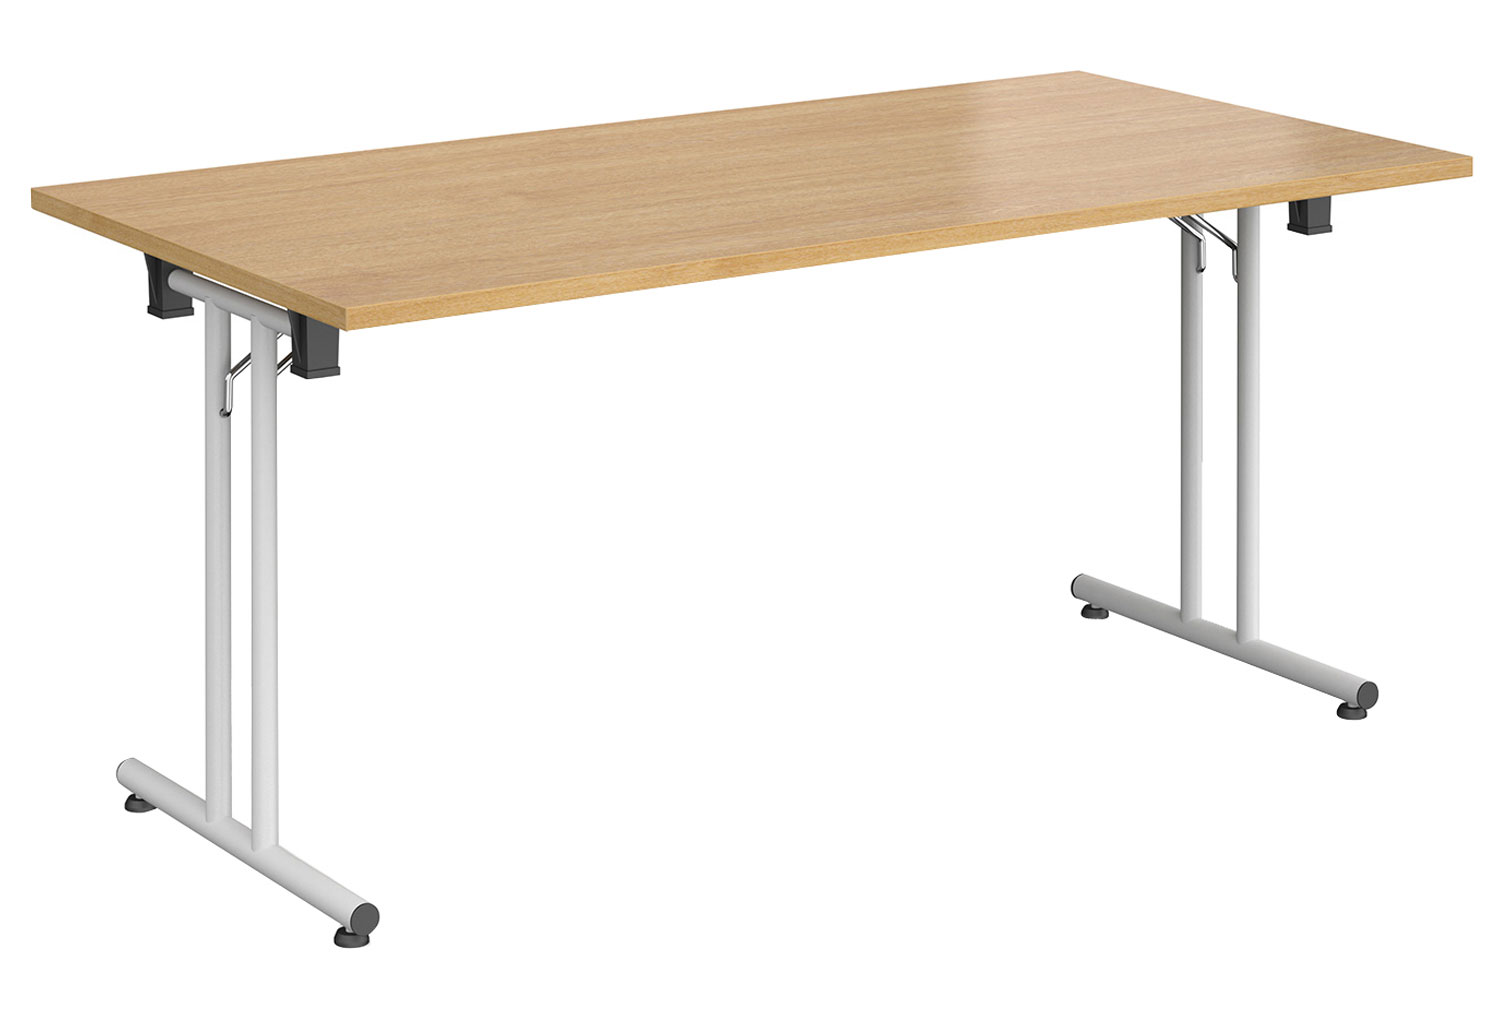 All Oak Rectangular Folding Table, 160wx80dx73h (cm)